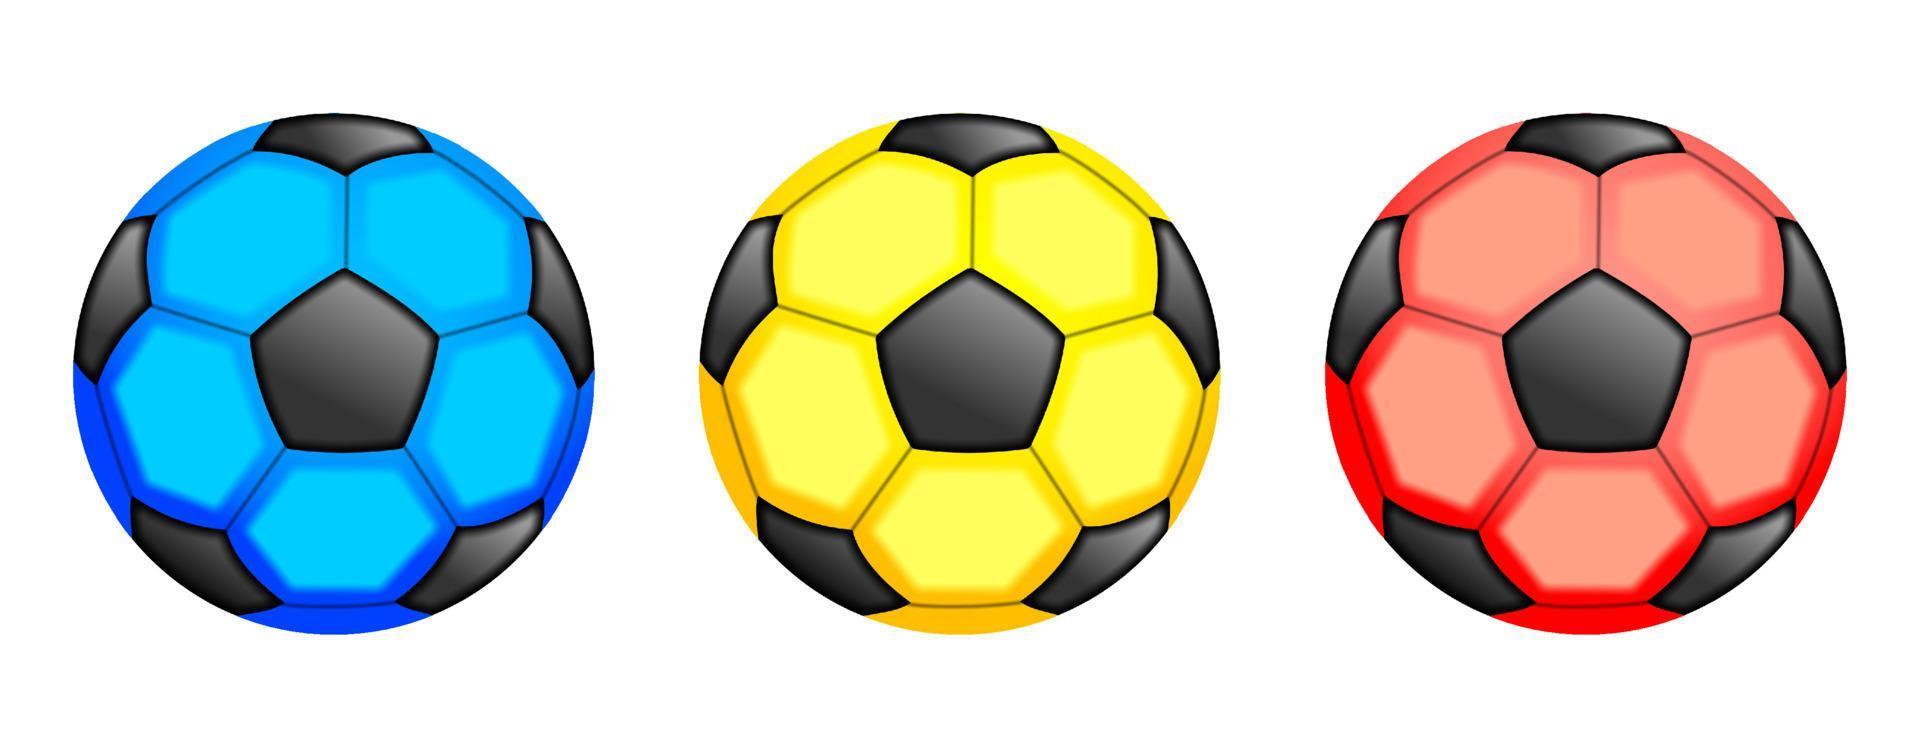 Colorful Soccer Balls vector